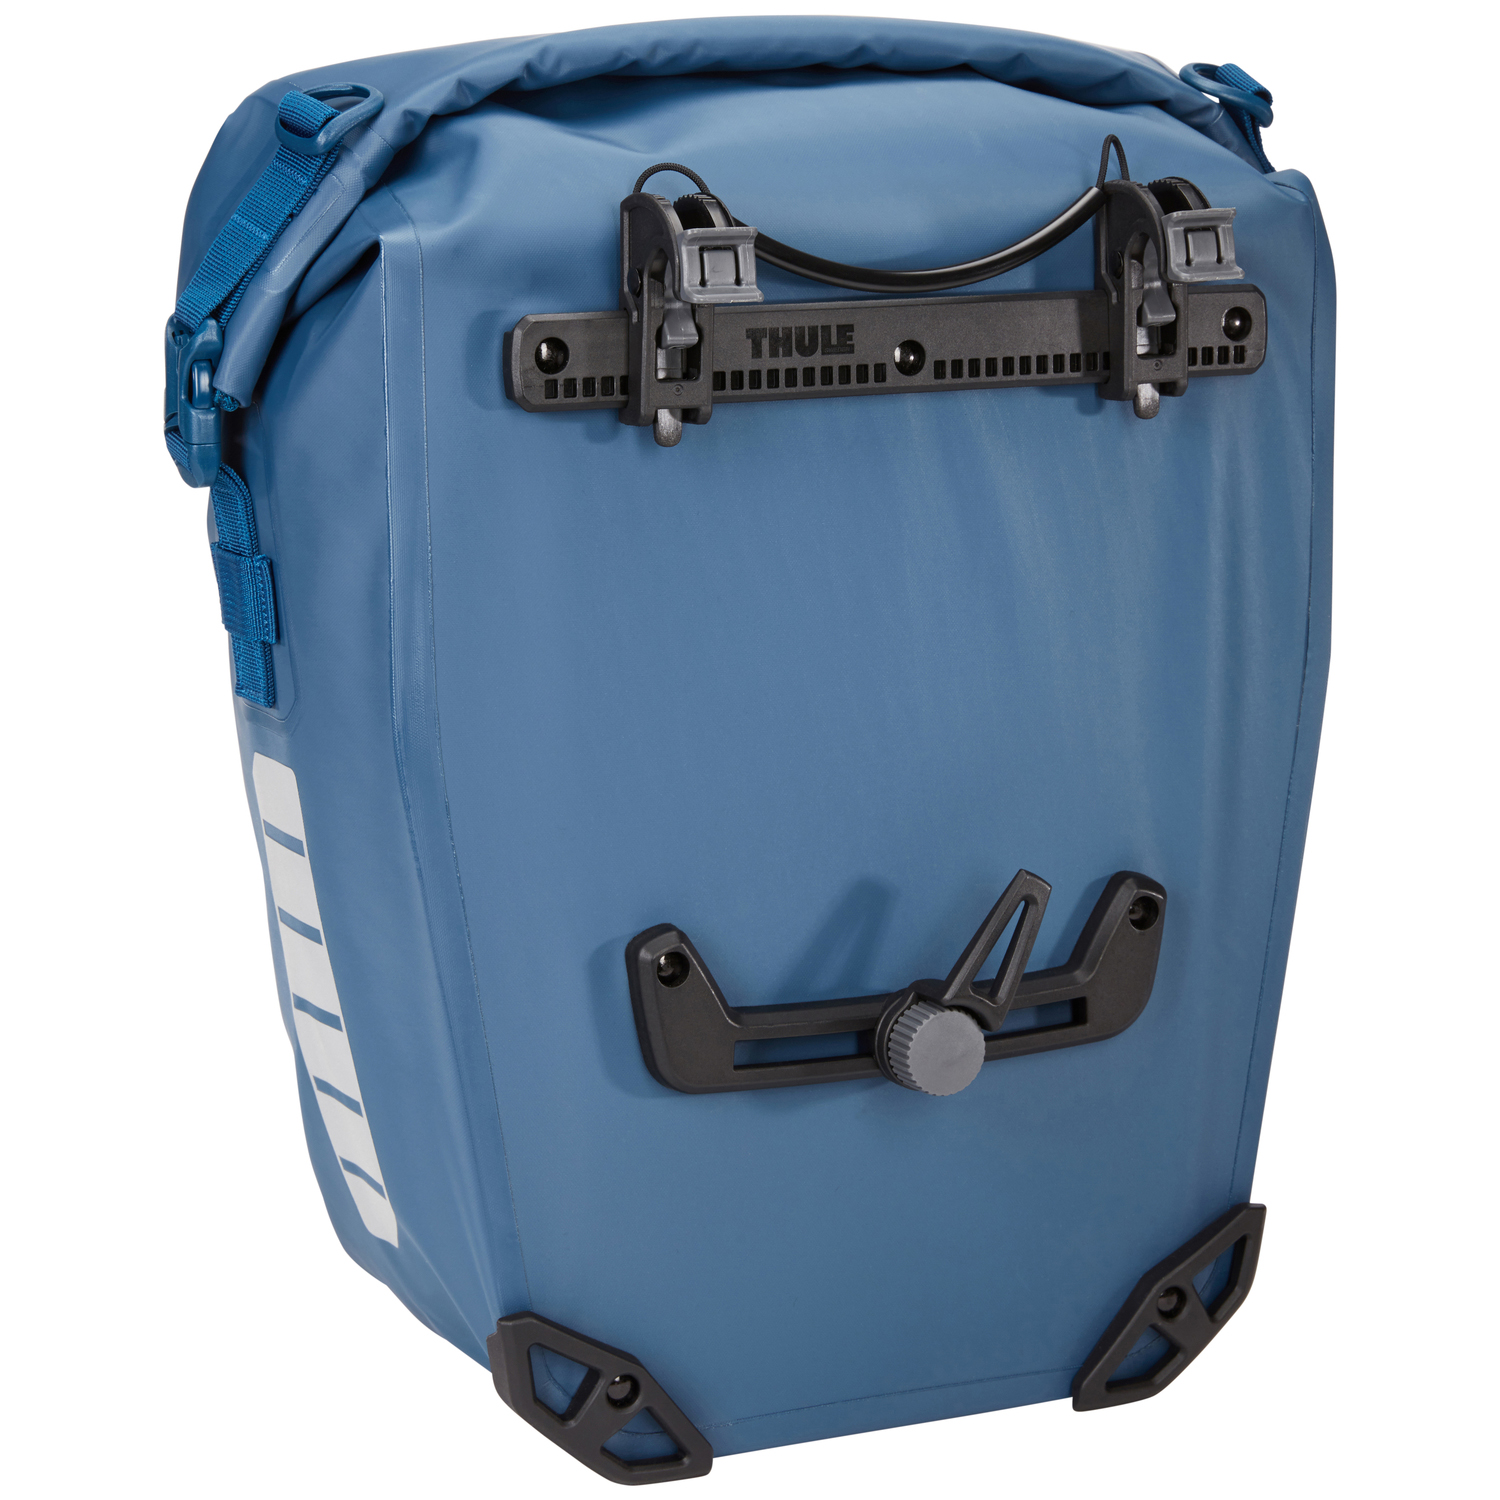 1 Paar Thule Shield Pannier 25L Fahrradtaschen Packtaschen wasserdicht blau